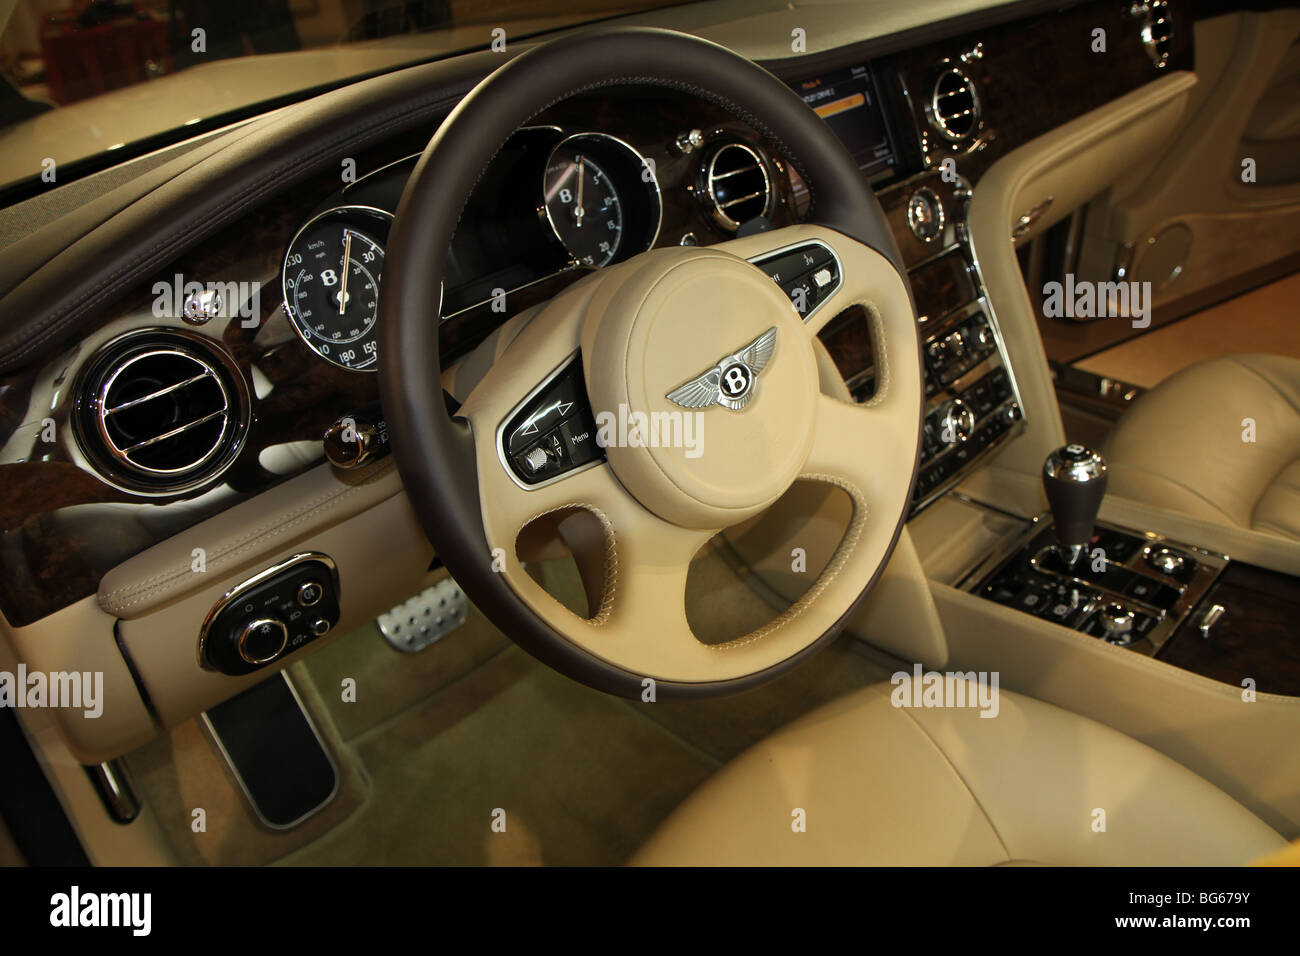 2011 Bentley Mulsanne Interior Stock Photo - Alamy